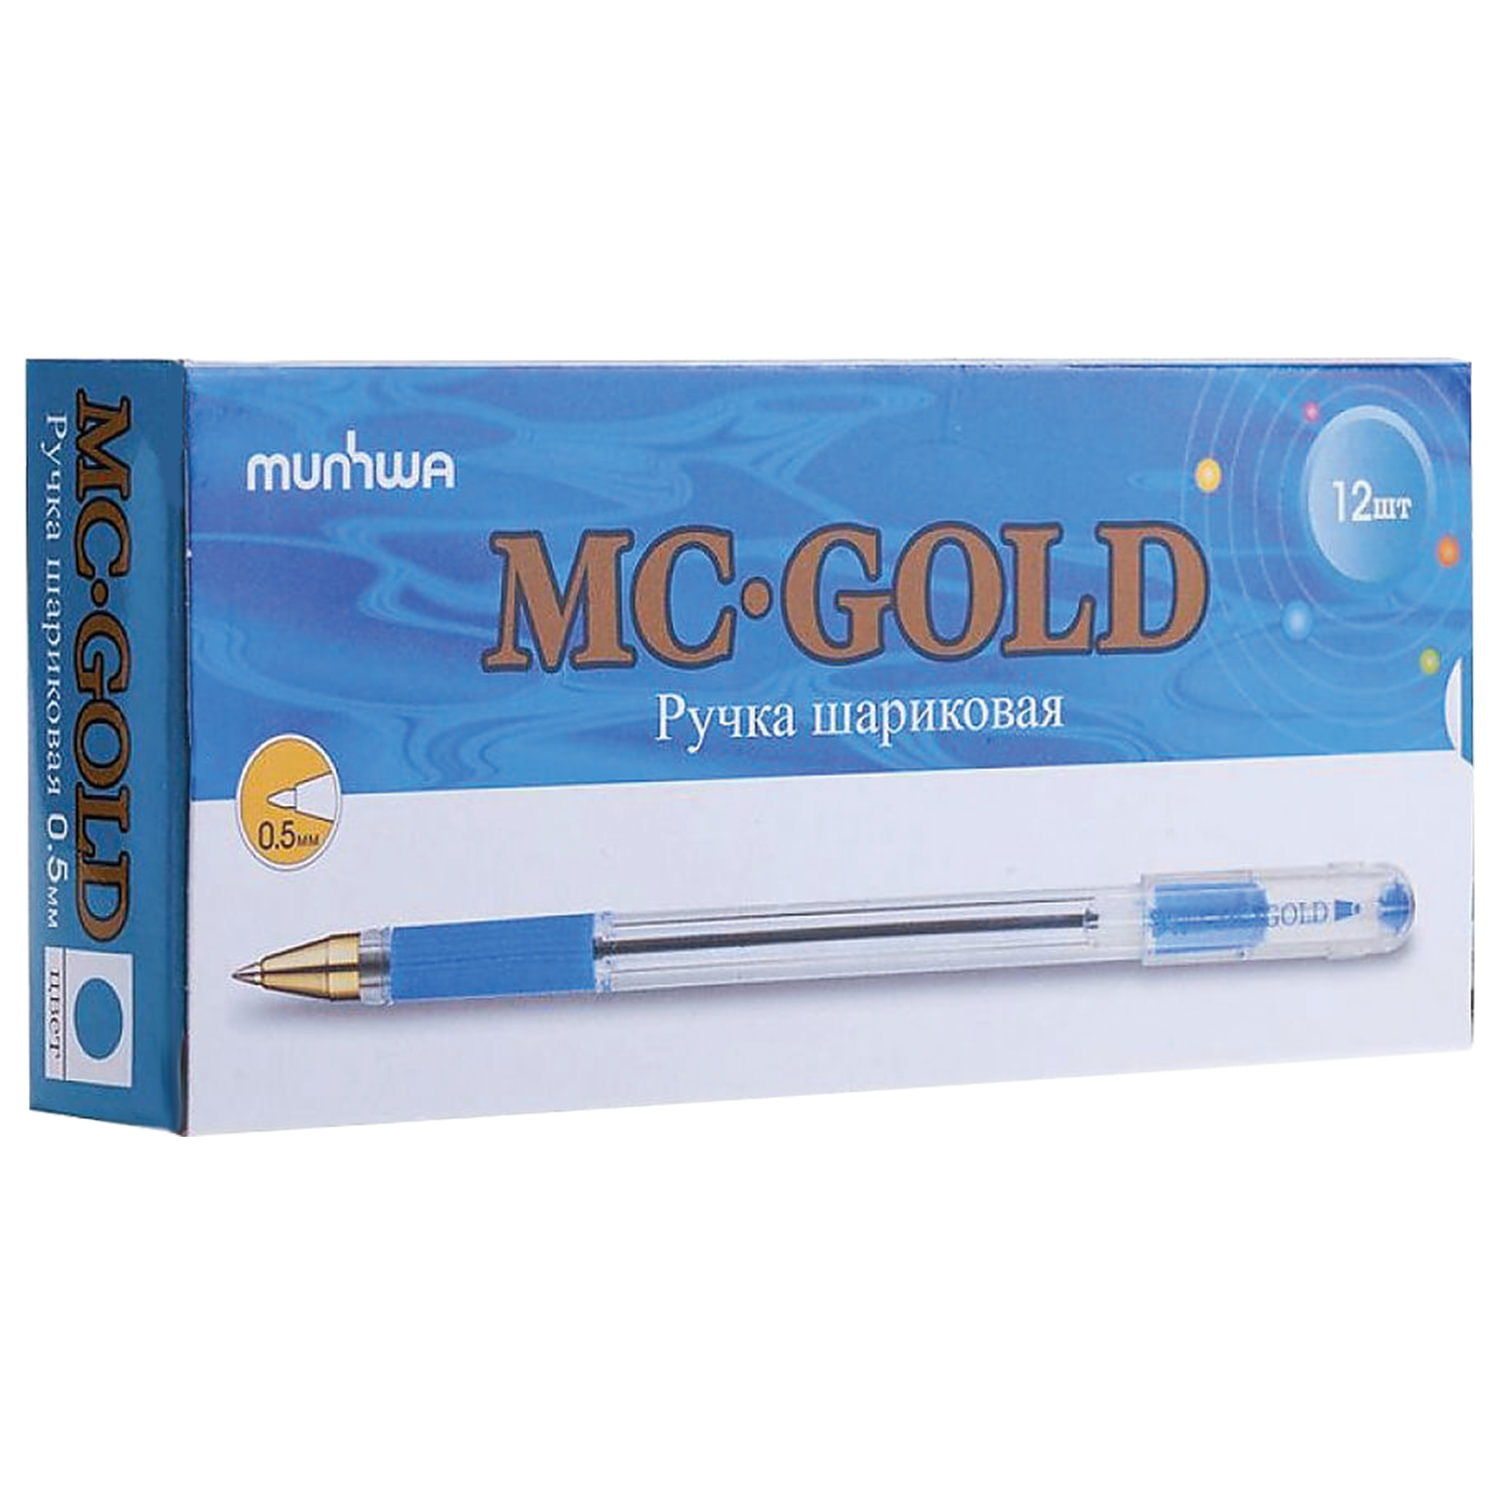 Mc gold ручка. Ручка шариковая MUNHWA MC Gold узел 0.5 мм. Ручка шариковая Munhva "MC Gold" 0,5мм, синяя, грип, маслянная. Ручка MUNHWA MC Gold 0.5 голубая. Ручка шариковая MUNHWA MC Gold синяя.